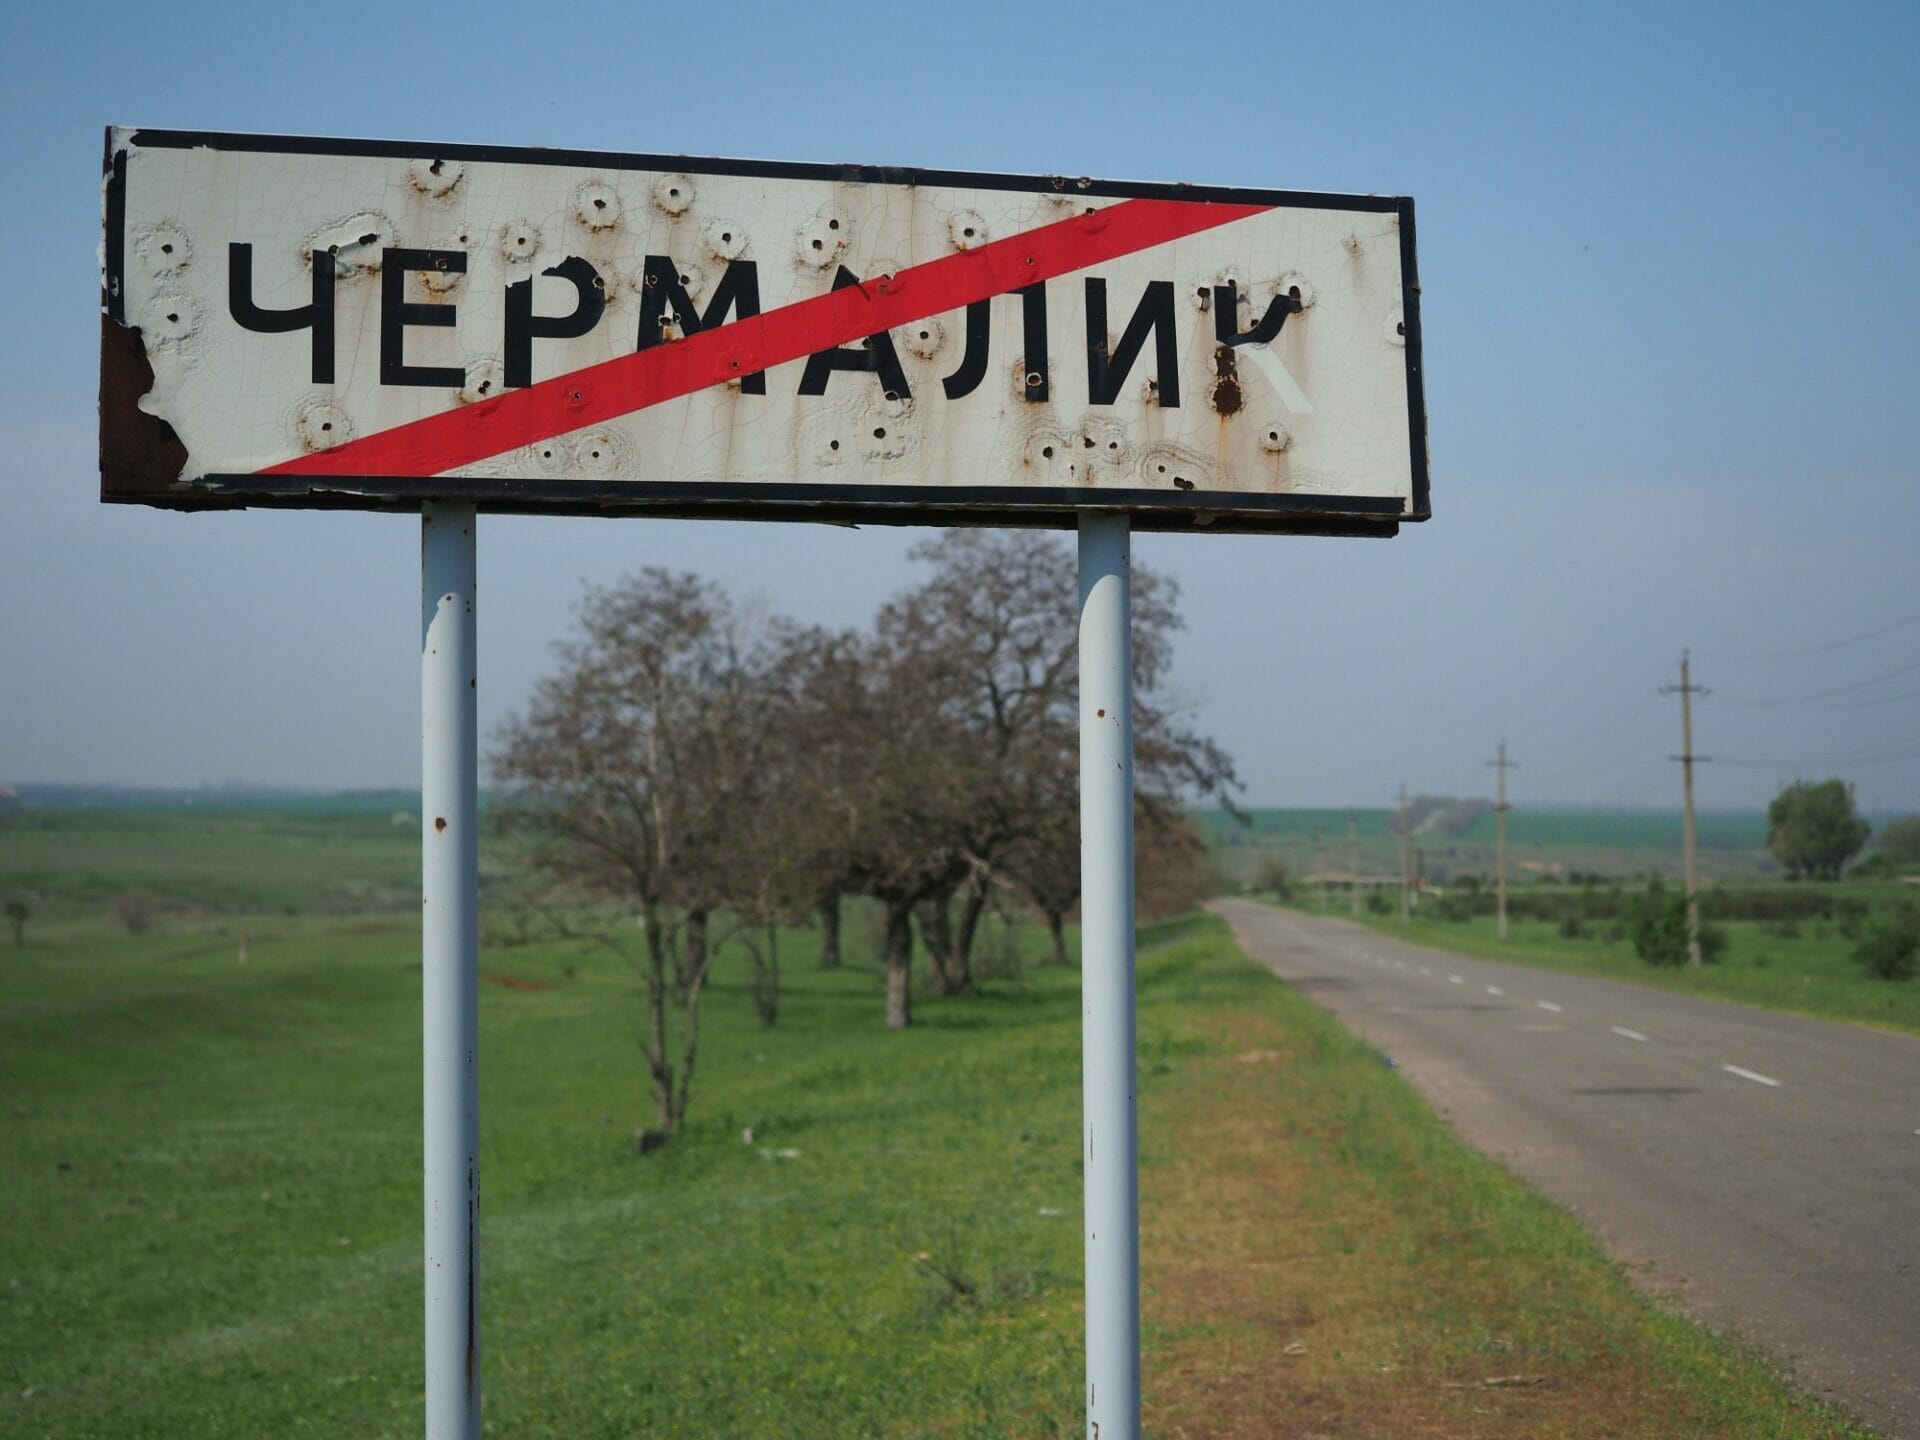 The town sign of Chermalyk. Photos: Niklas Golitschek